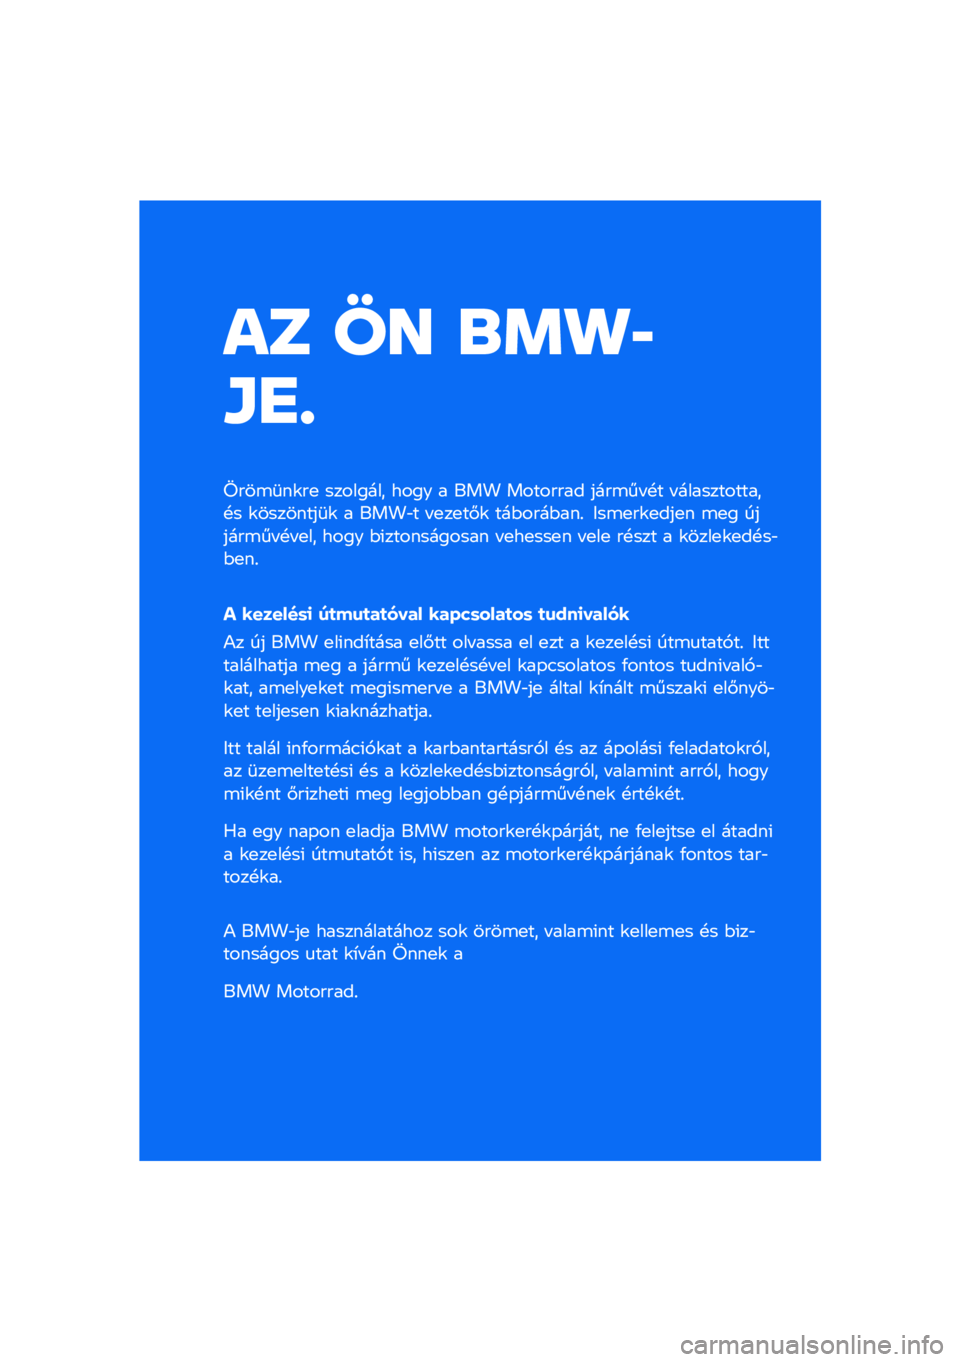 BMW MOTORRAD R NINE T URVAN G/S 2020  Kezelési útmutató (in Hungarian) �� �� �\b�	�
�
�\f�
�
����\b�	��\f��
 �������� ���� � ��� �������� ����\b�� �!� � ������������!� �\f��������	�\f � ����"� � �
��
��#�\